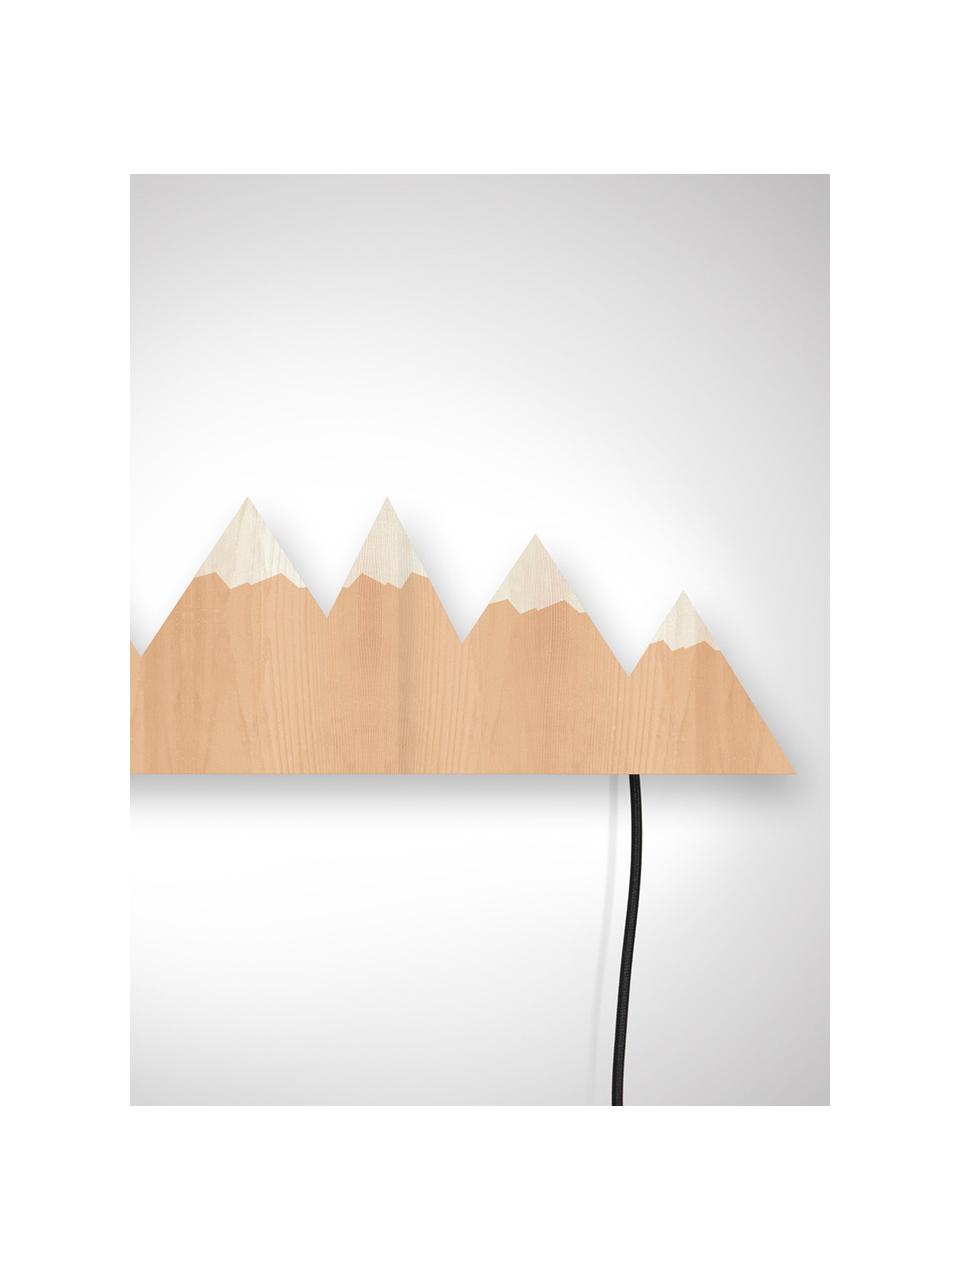 LED-Wandleuchte Mountains mit Stecker, Leuchte: Sperrholz, beschichtet, Braun, Creme, B 50 x H 16 cm